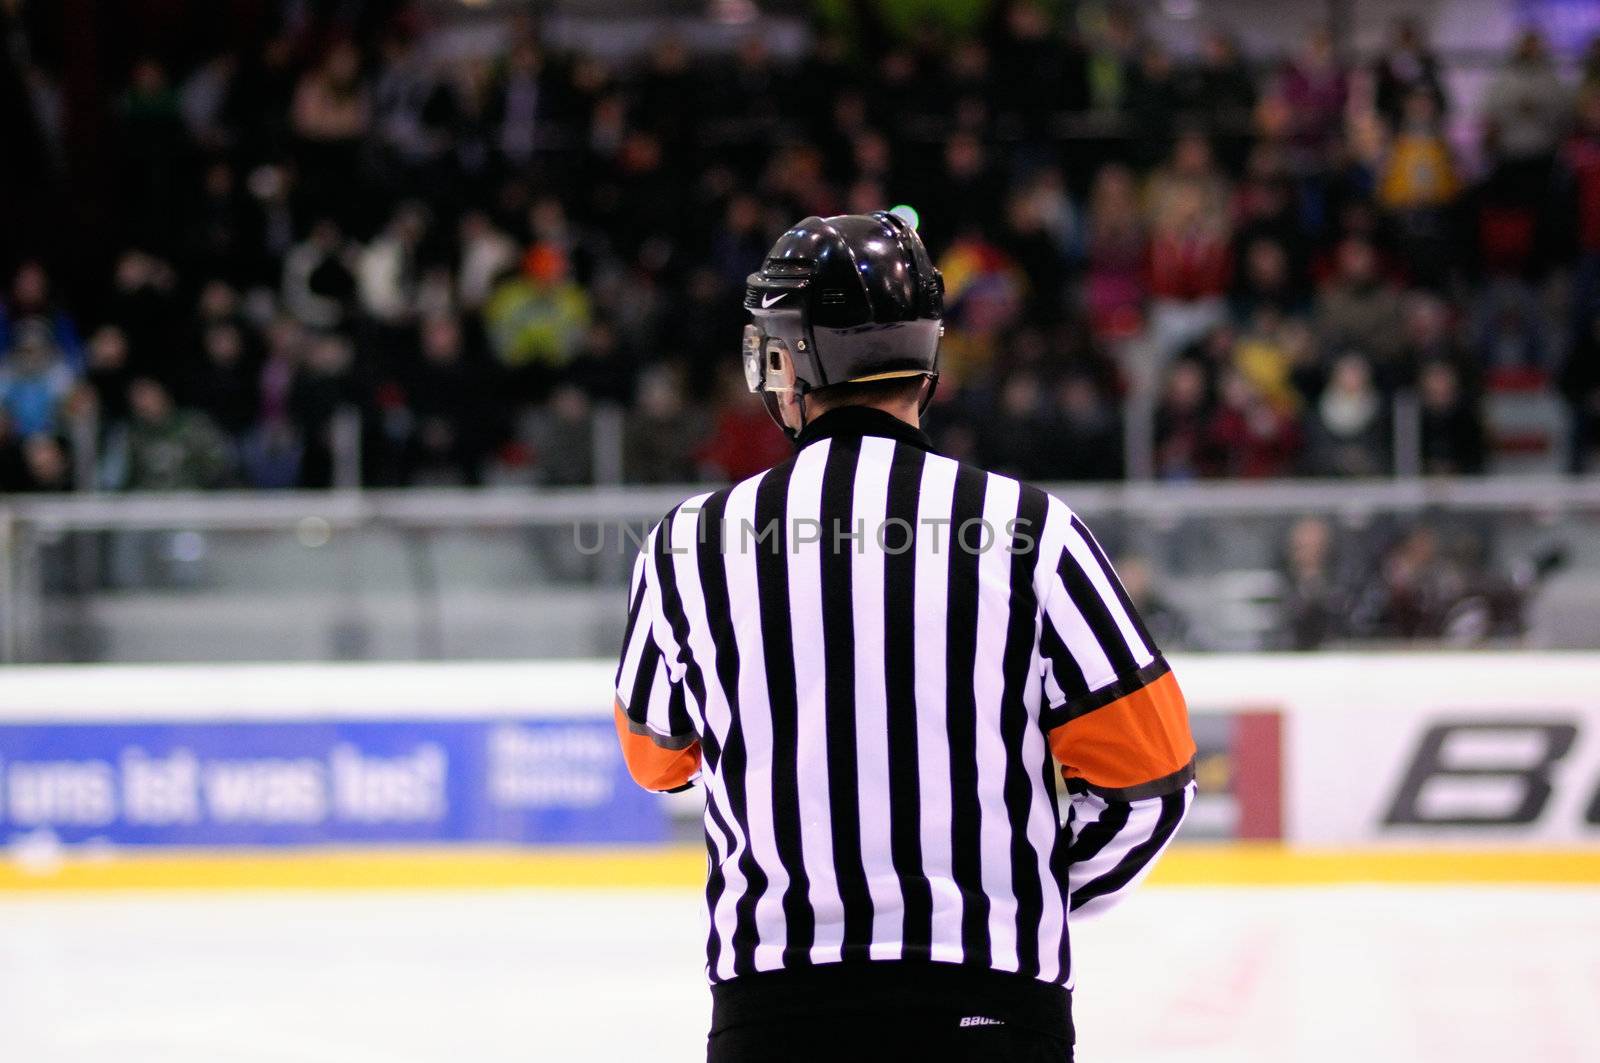 Hockey referee by fahrner